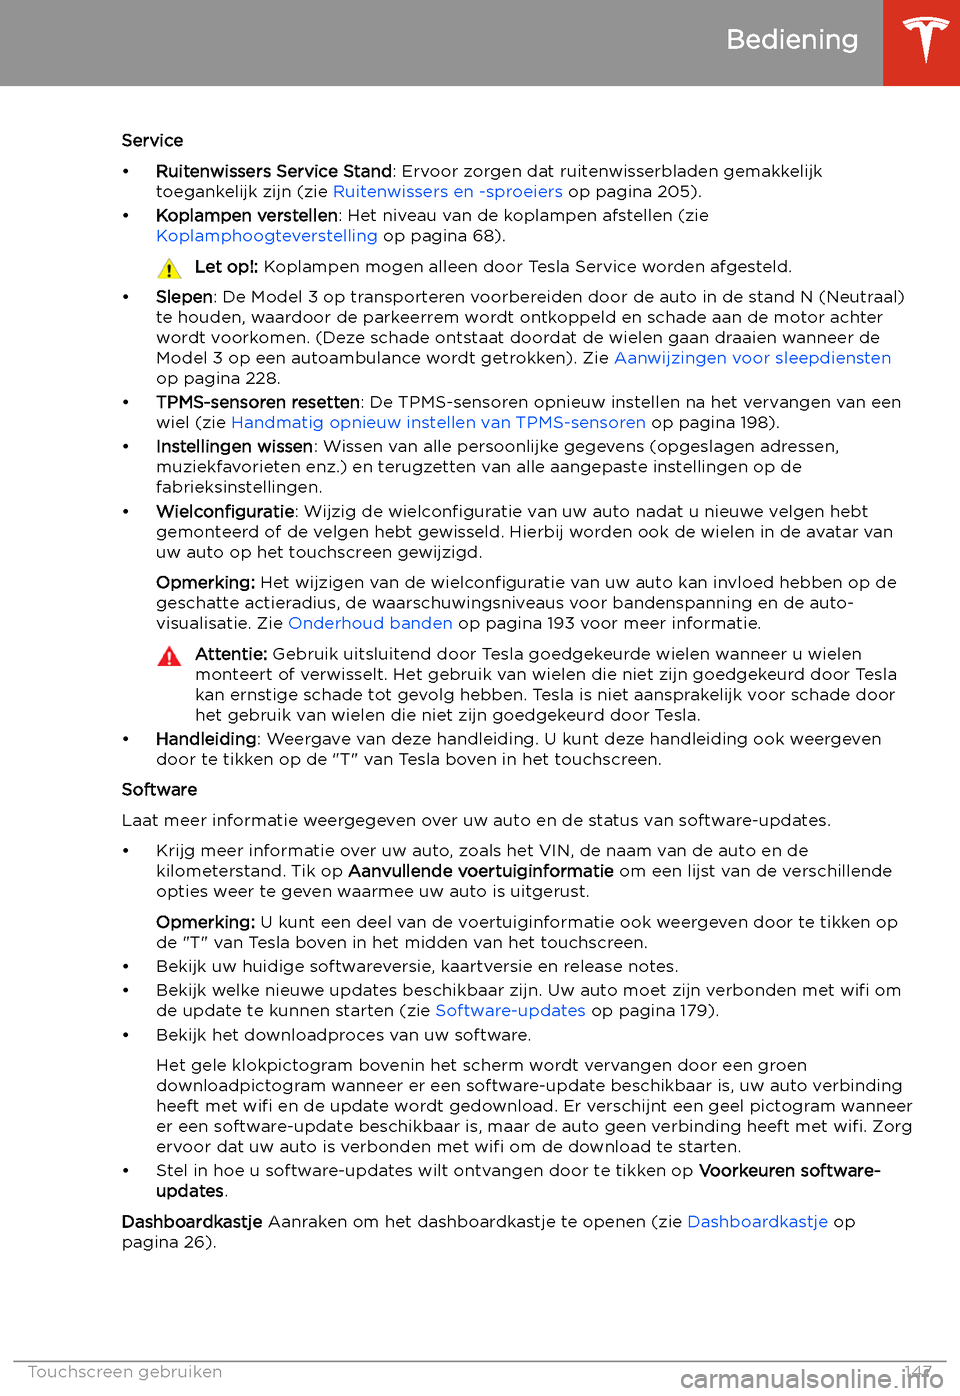 TESLA MODEL 3 2020  Handleiding (in Dutch) Service
